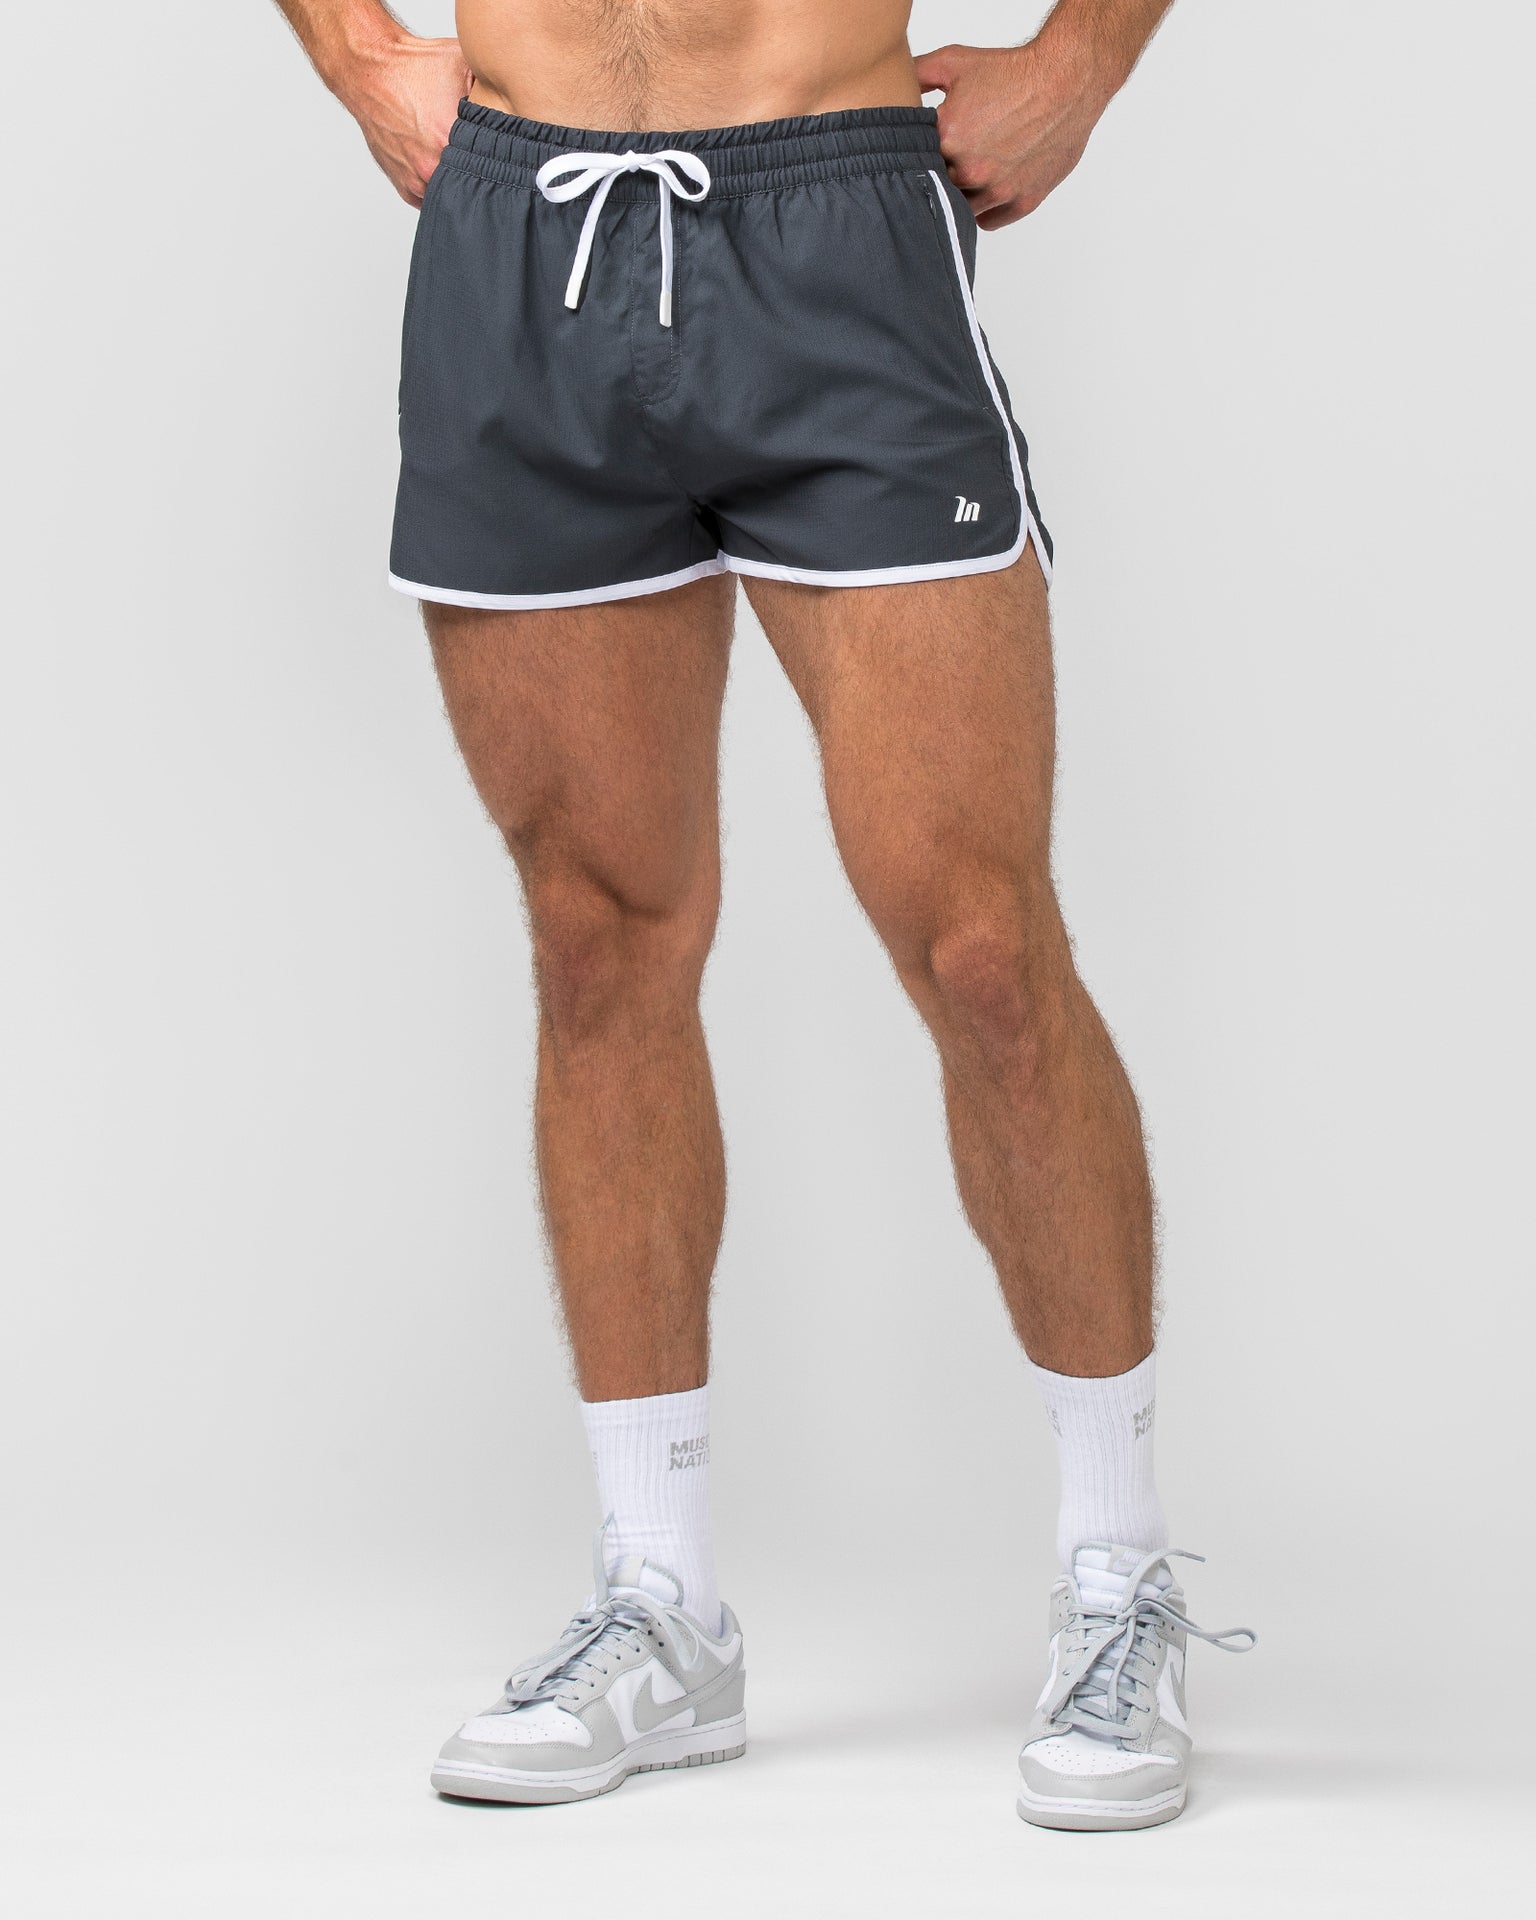 Muscle Nation Gym Shorts Retro Shorts - Dark Thunder